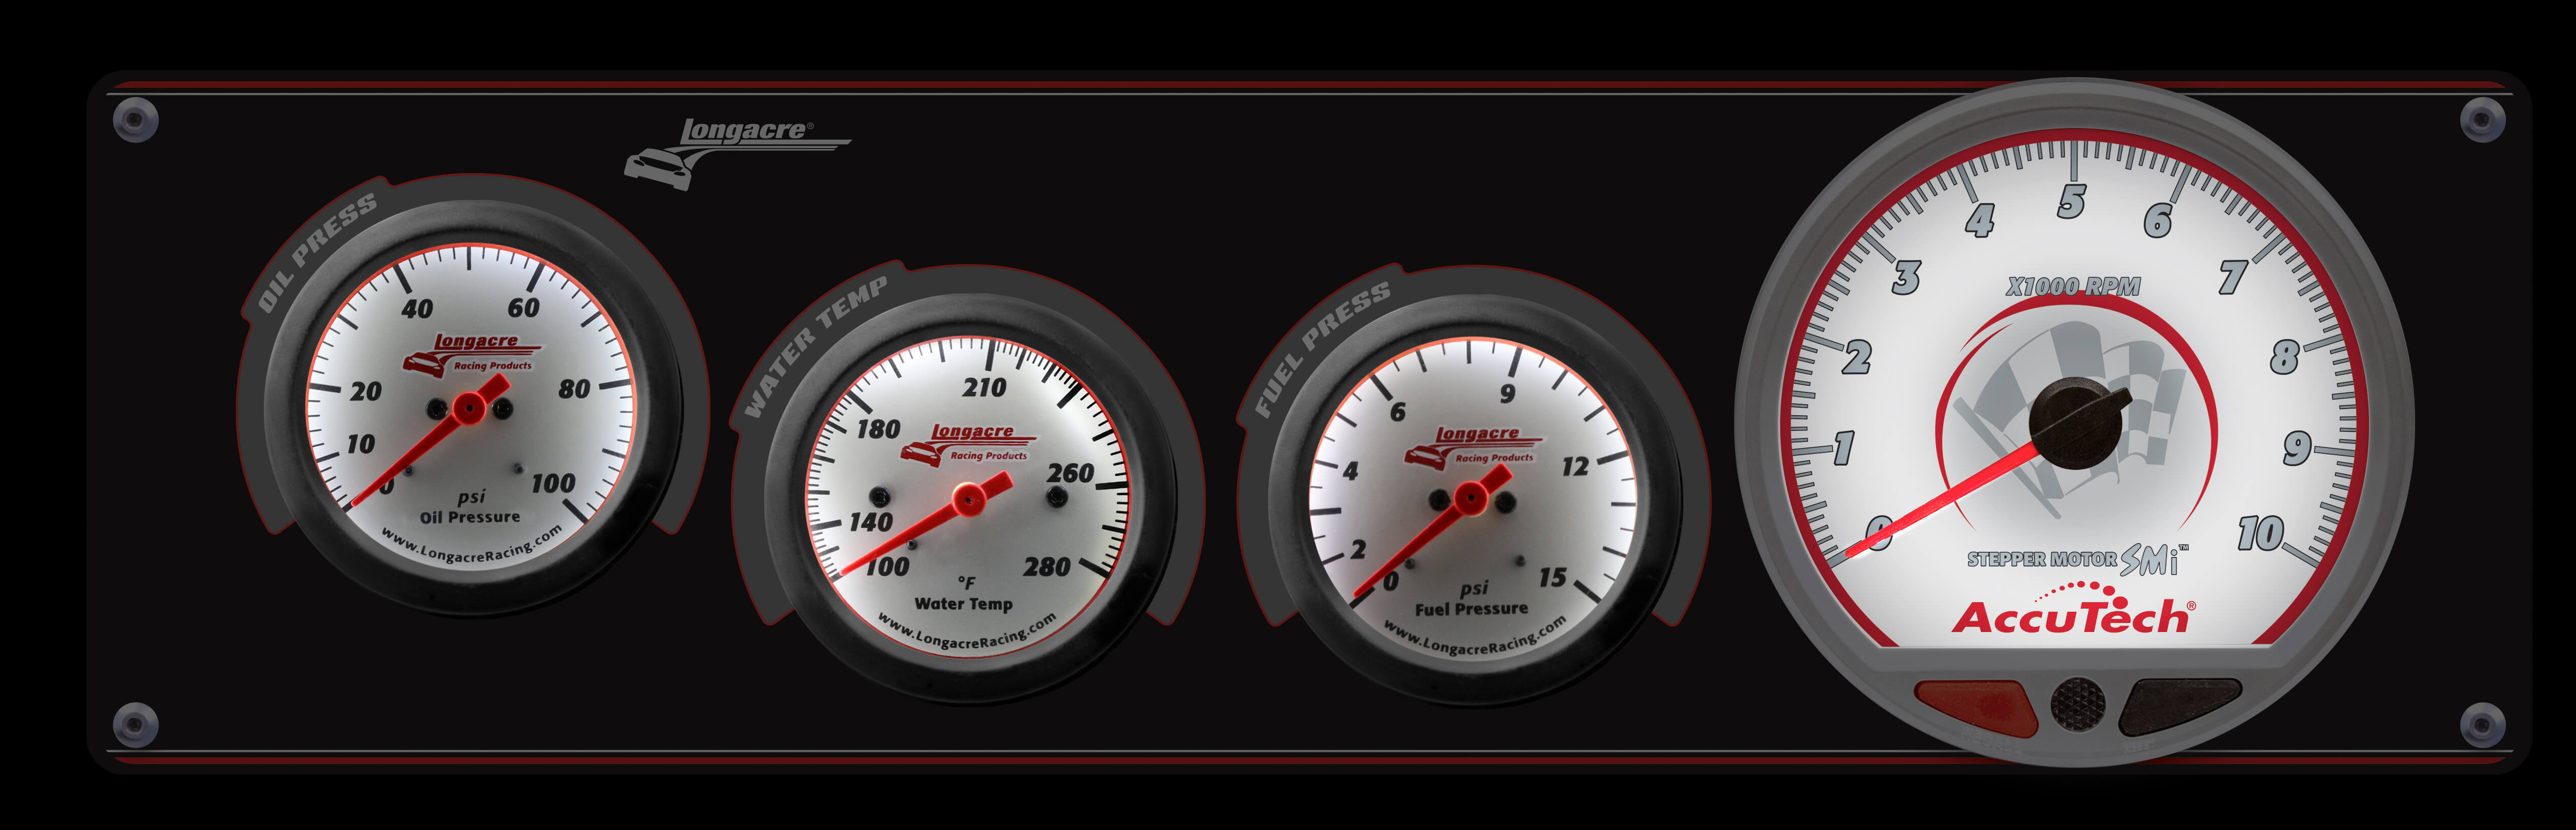 Sportsman™ Elite 3 Gauge Panel w/Tach  Oil Pressure, Water Temperature, Fuel Pressure